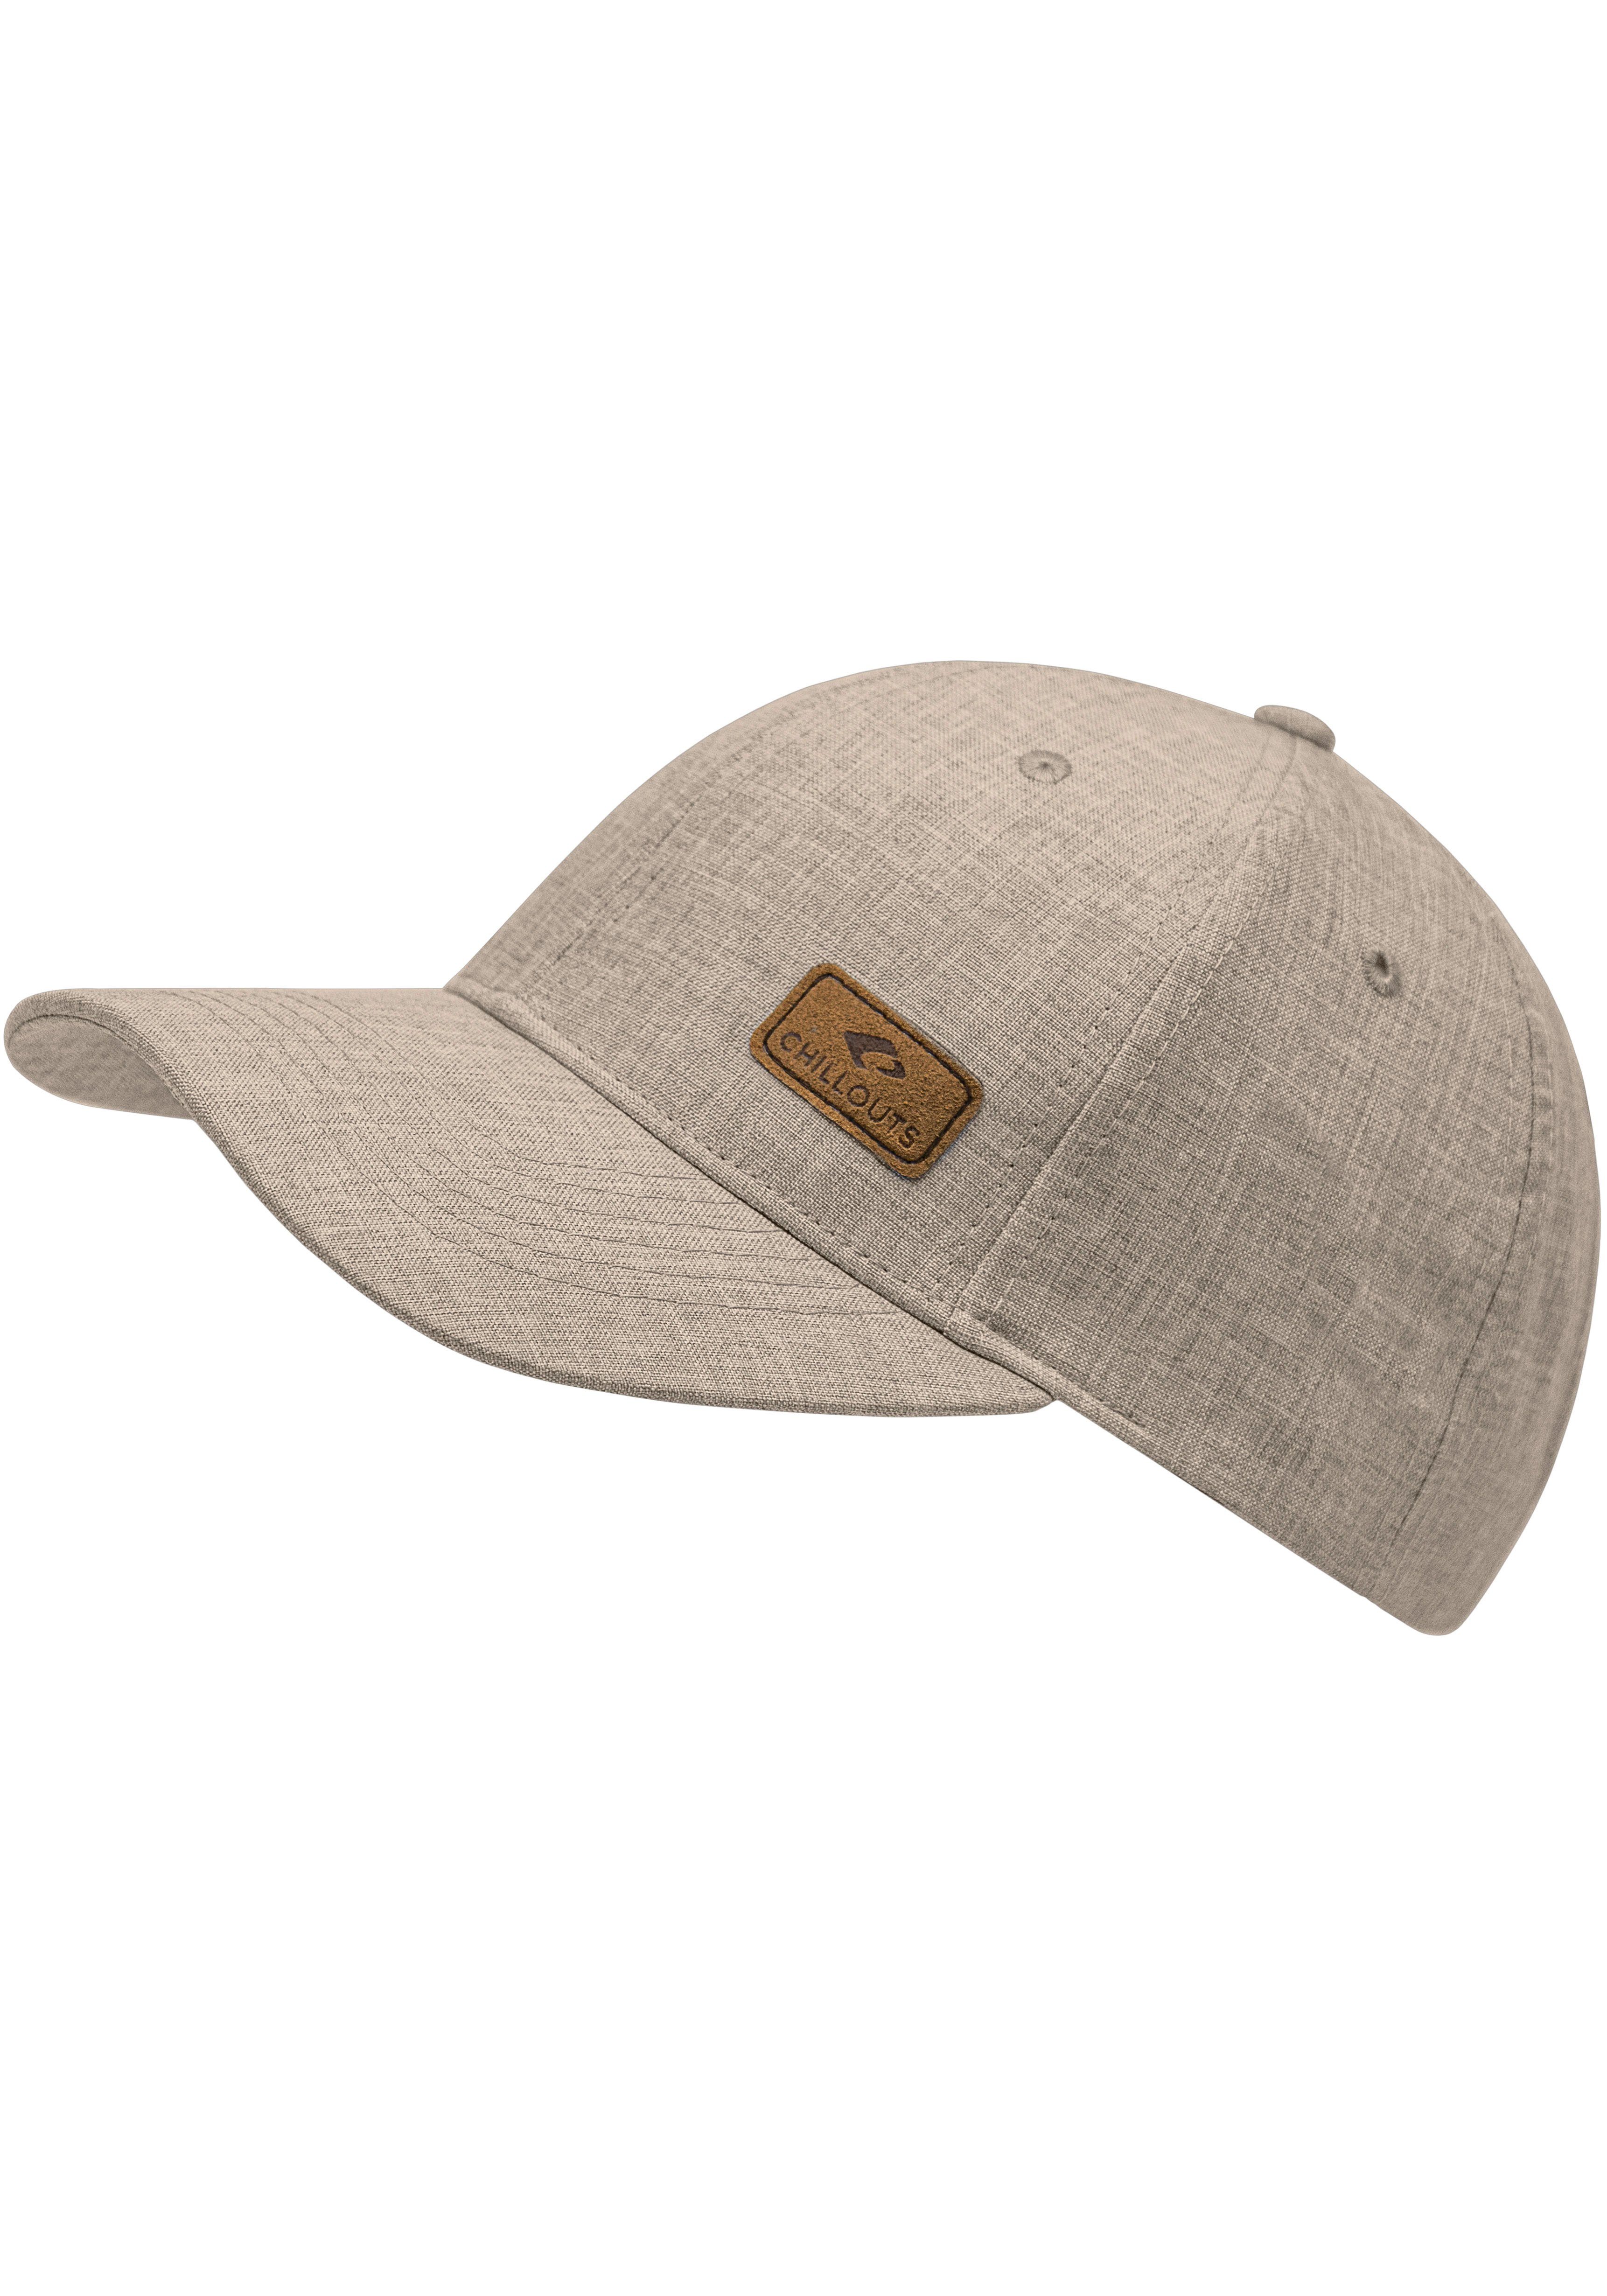 chillouts Baseball Cap Amadora Hat melierter Optik, Size, beige in One verstellbar